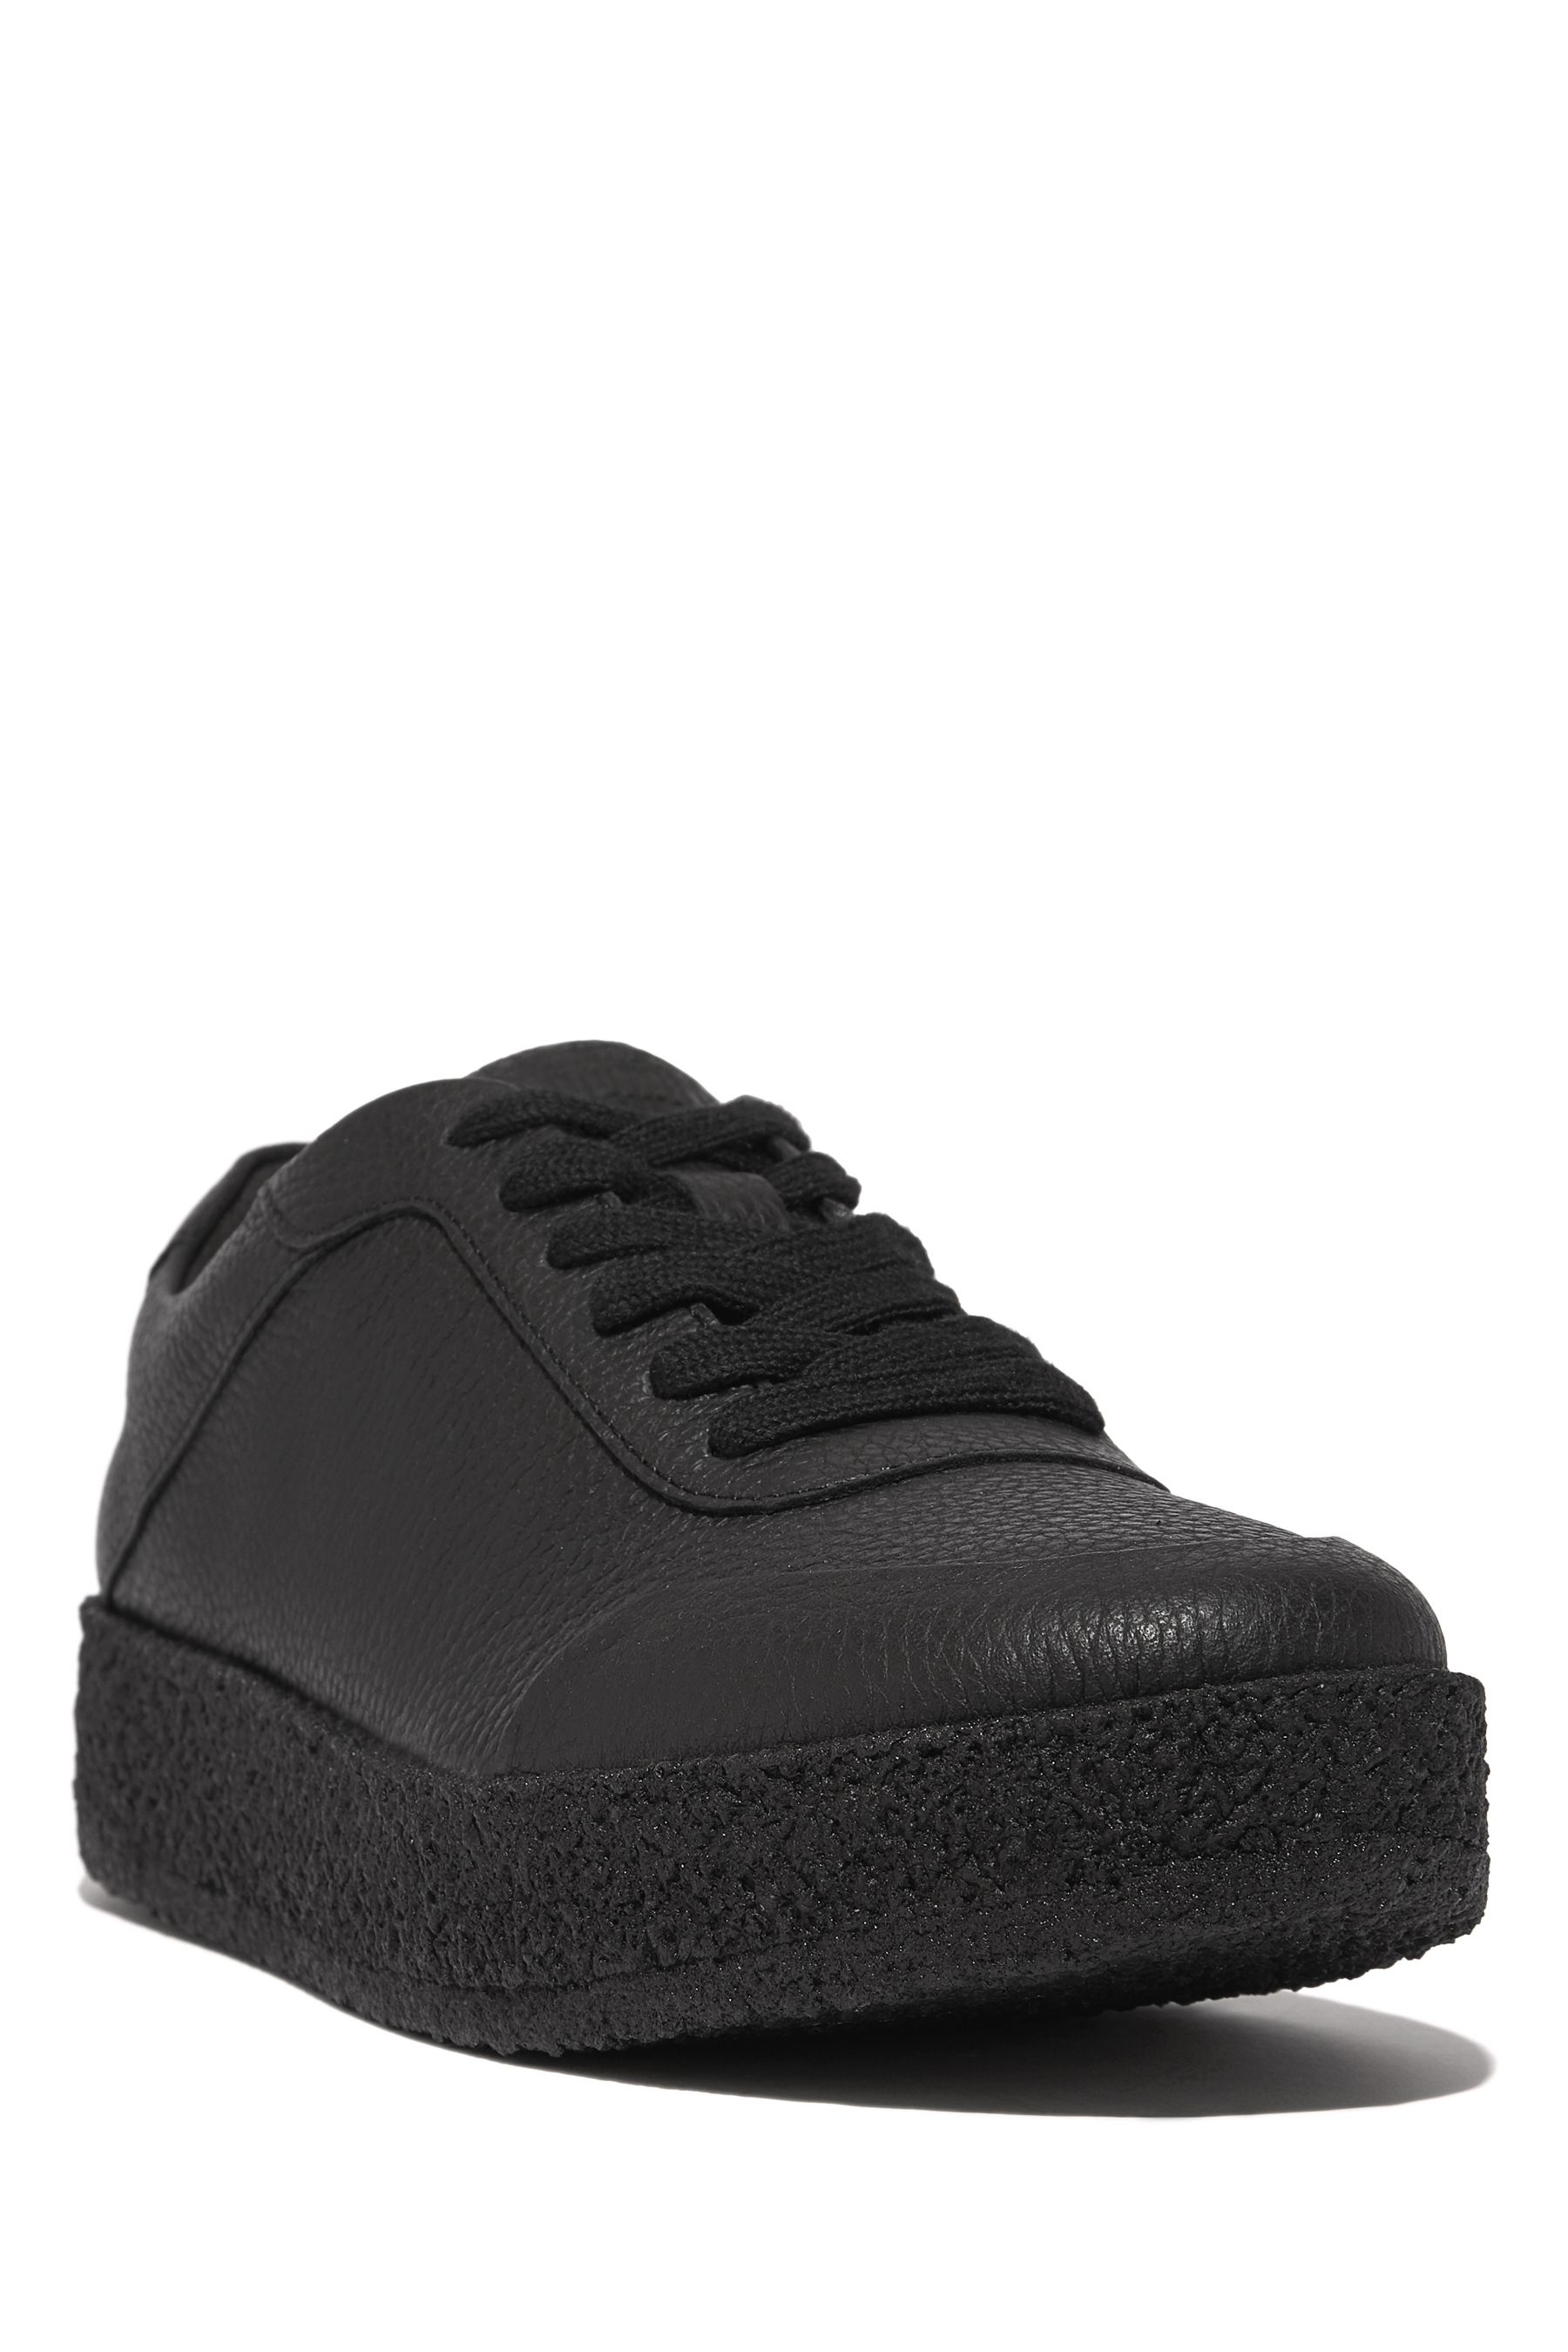 Fitflop Shoes Sale Online - Fitflop FLEXKNIT Mens Black Sneakers